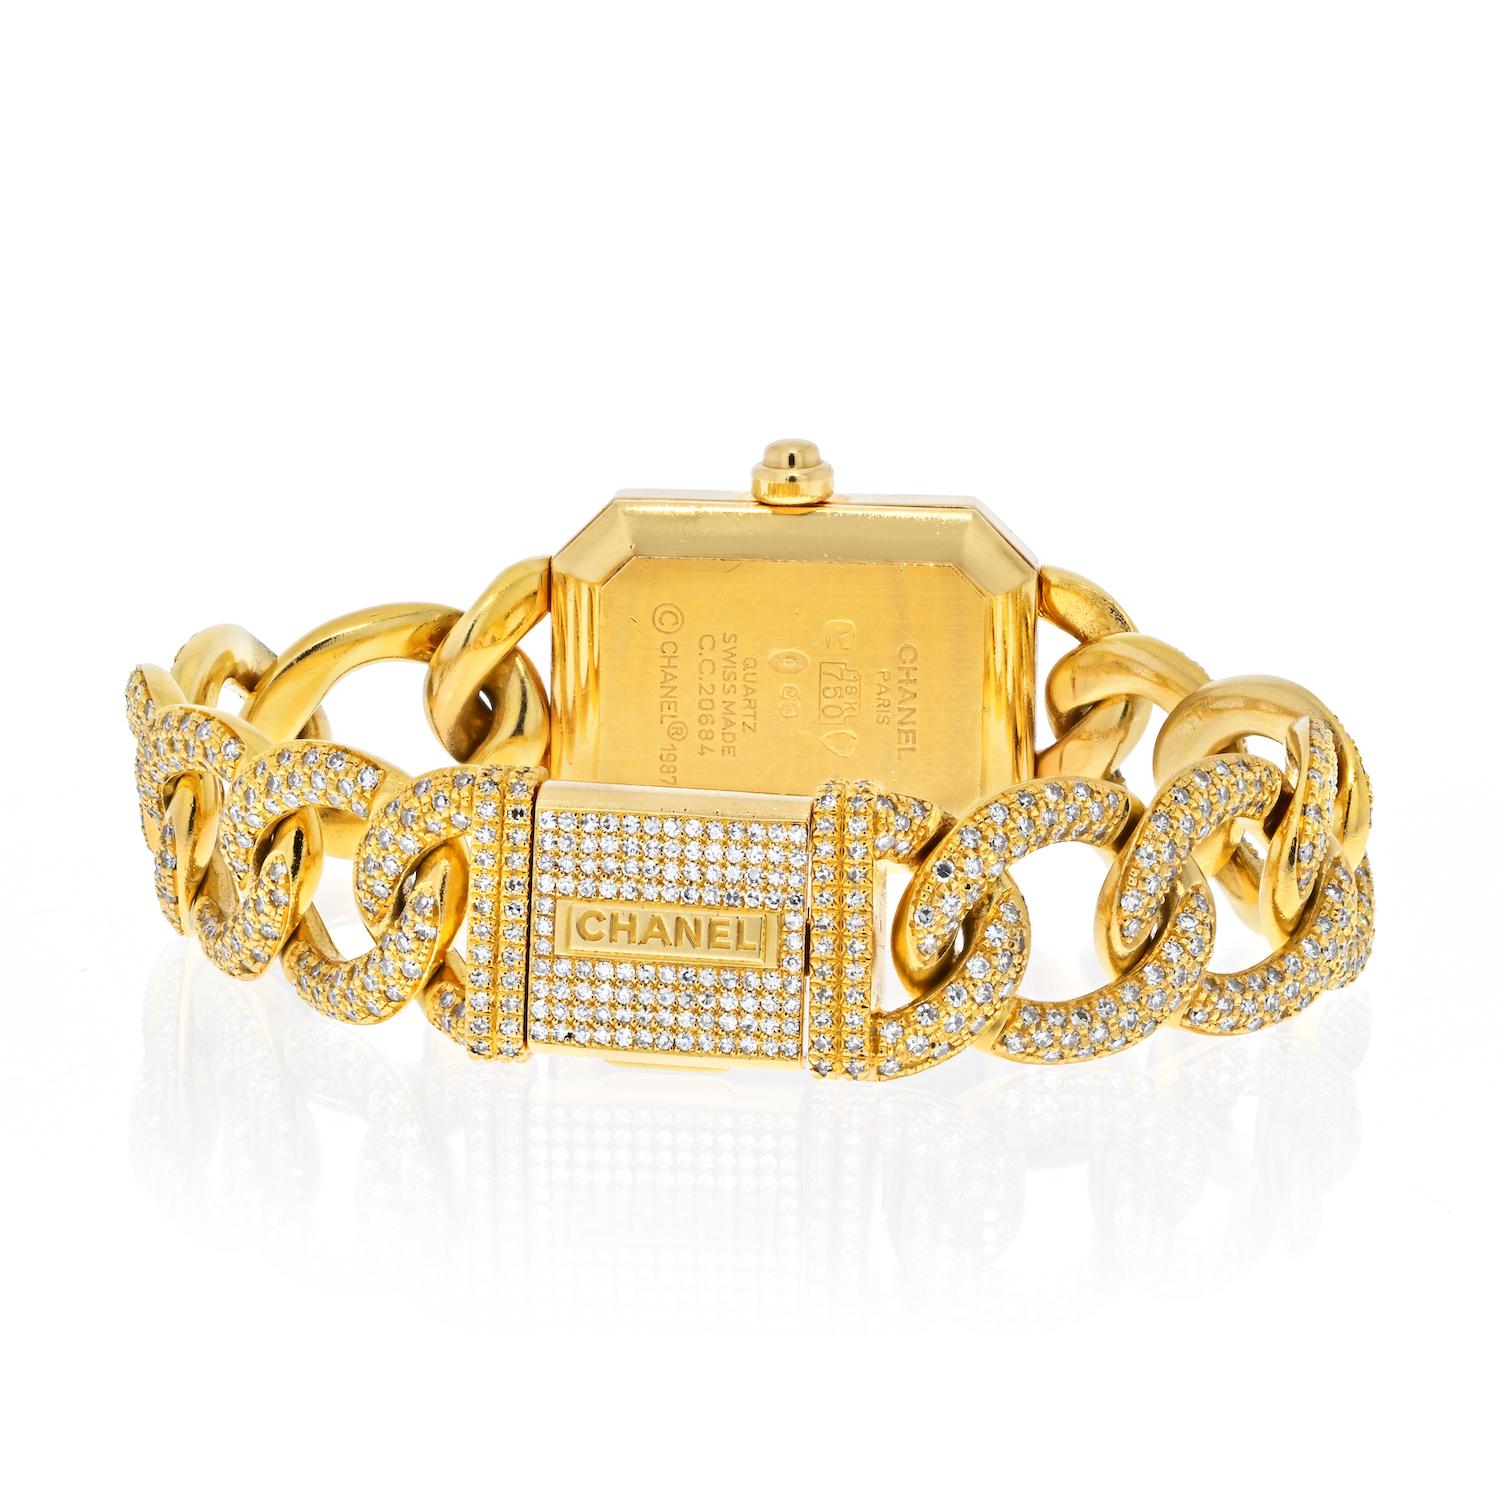 Chanel Gold Première Diamond Quartz Model H0114 Ladies Watch.

18K yellow gold 20mm x 26mm Chanel Premiere Chaine watch featuring a quartz movement, black dial with baton hands, diamond bezel, 18K yellow gold and pave diamond chain bracelet with